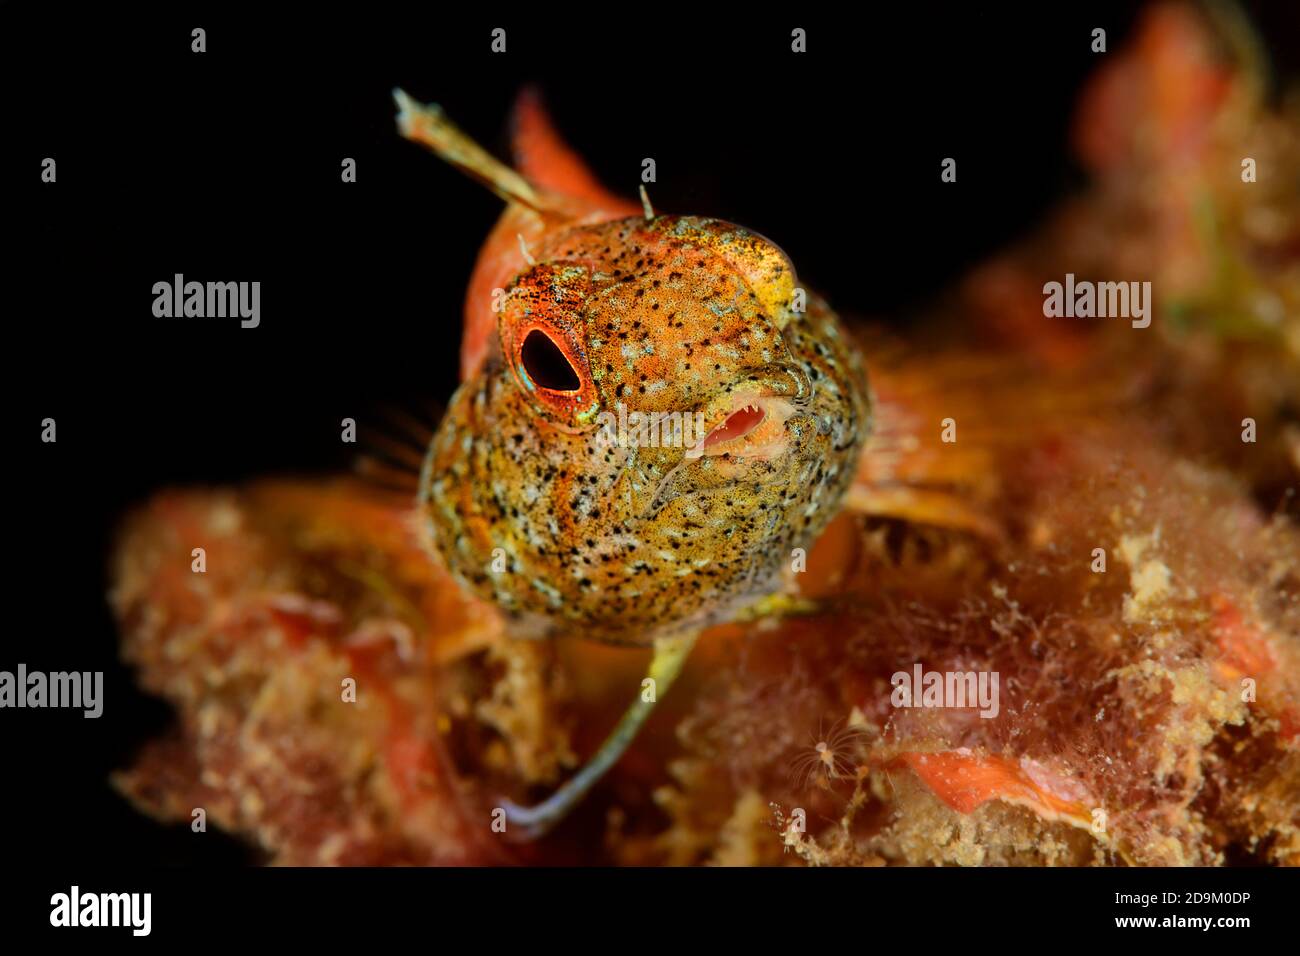 Pointed-headed slimy fish, Tripterygion delaisi, Tamariu, Costa Brava, Spain, Mediterranean Stock Photo